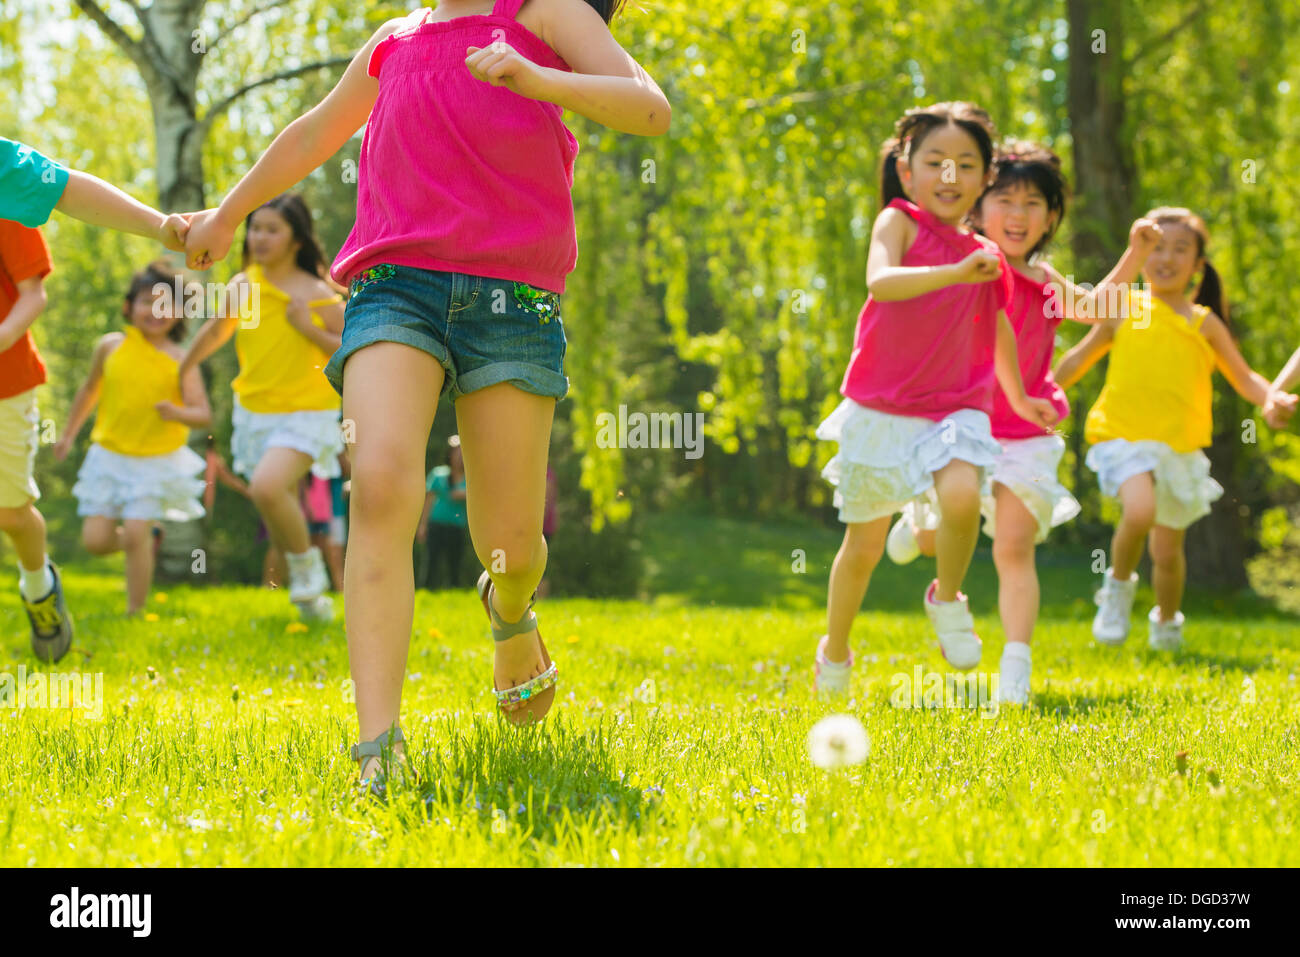 Children running on grass Stock Photo